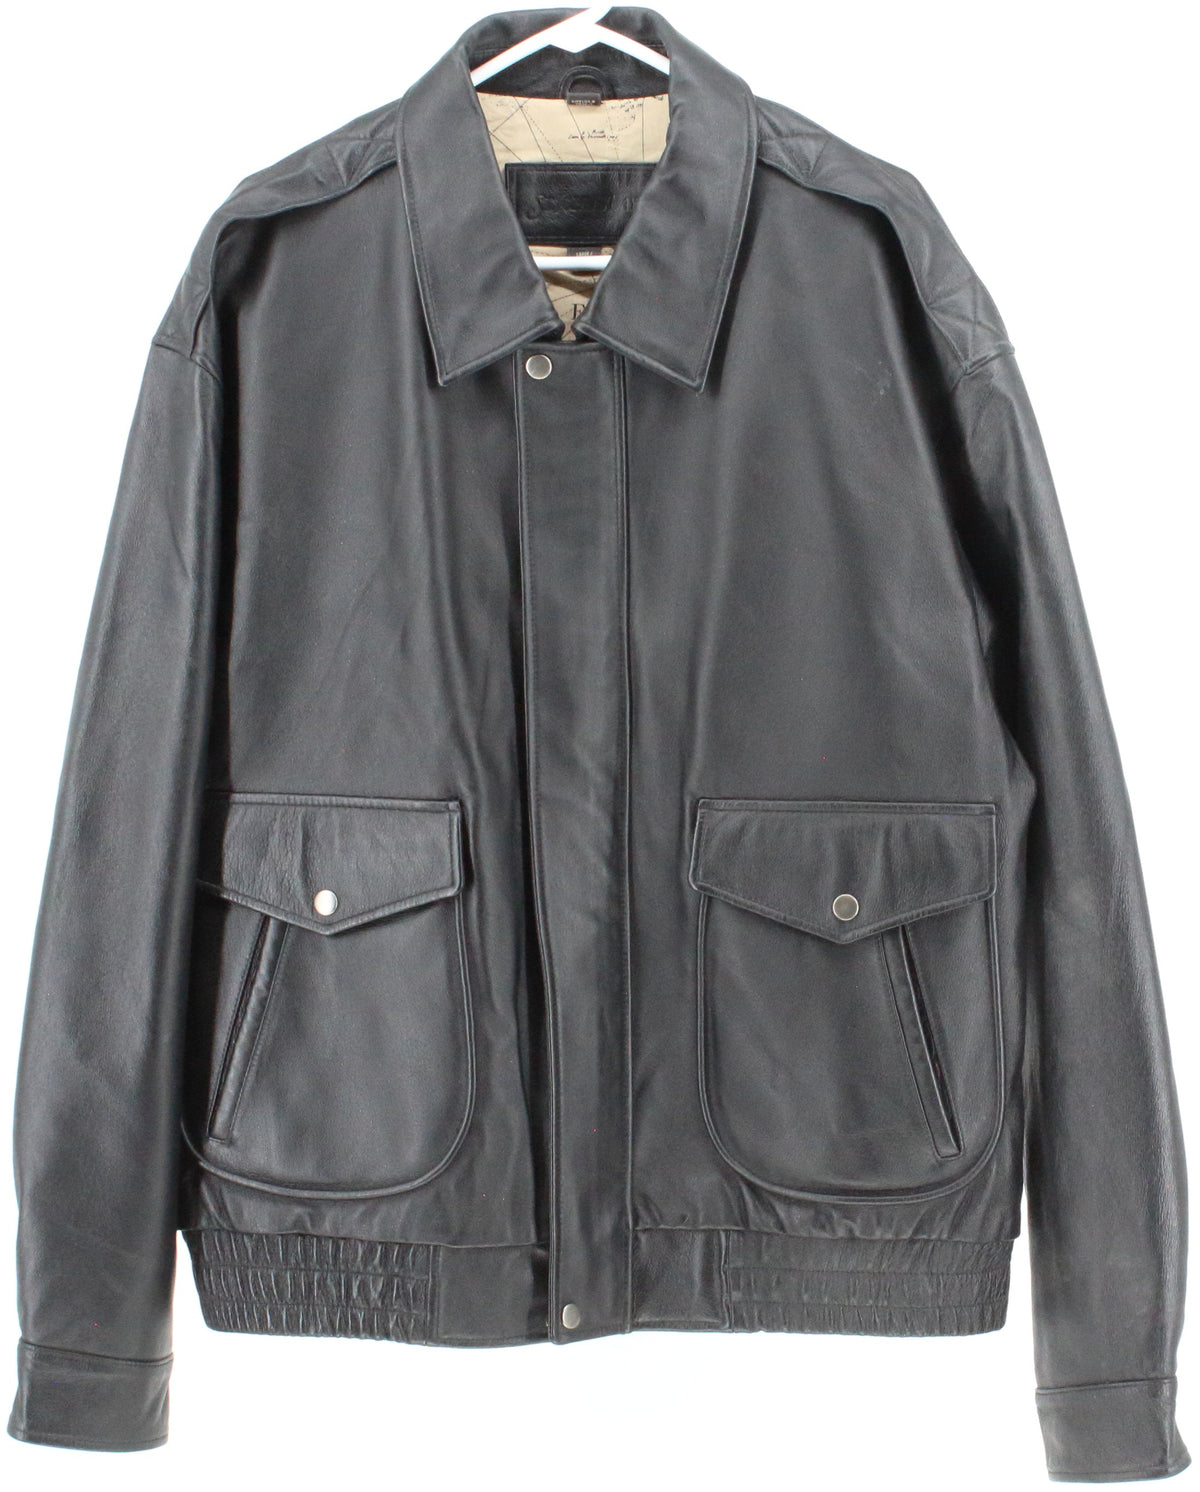 St John's Bay Black Leather Jacket